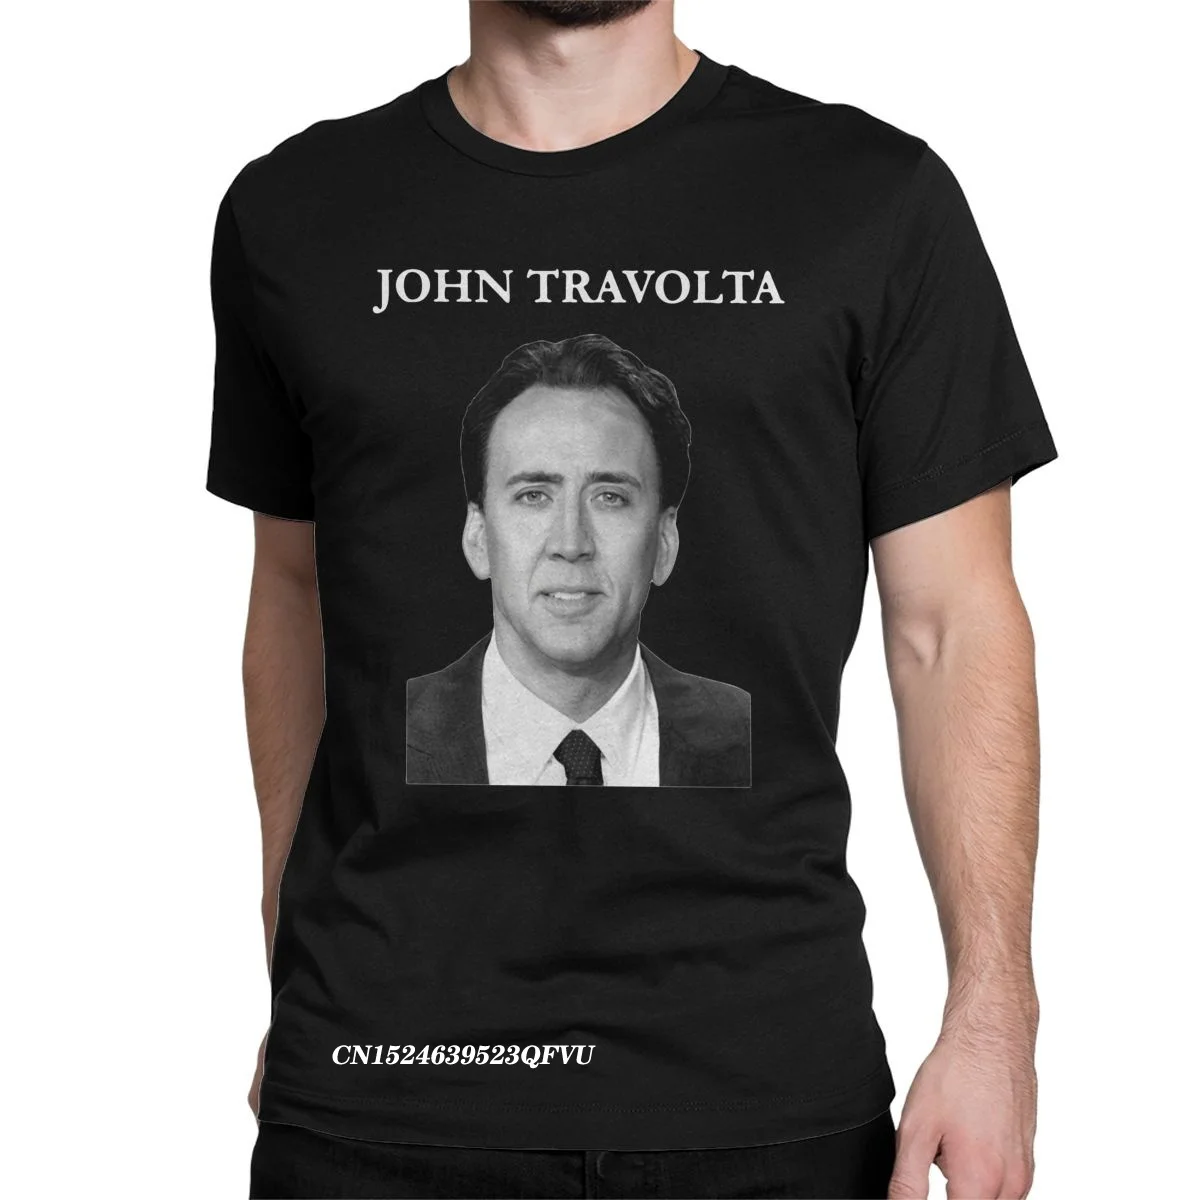 Men Tee Shirt Nicolas Cage John Travolta Face Off Funny Cotton Tees Harajuku Tshirt Crewneck Tops Adult